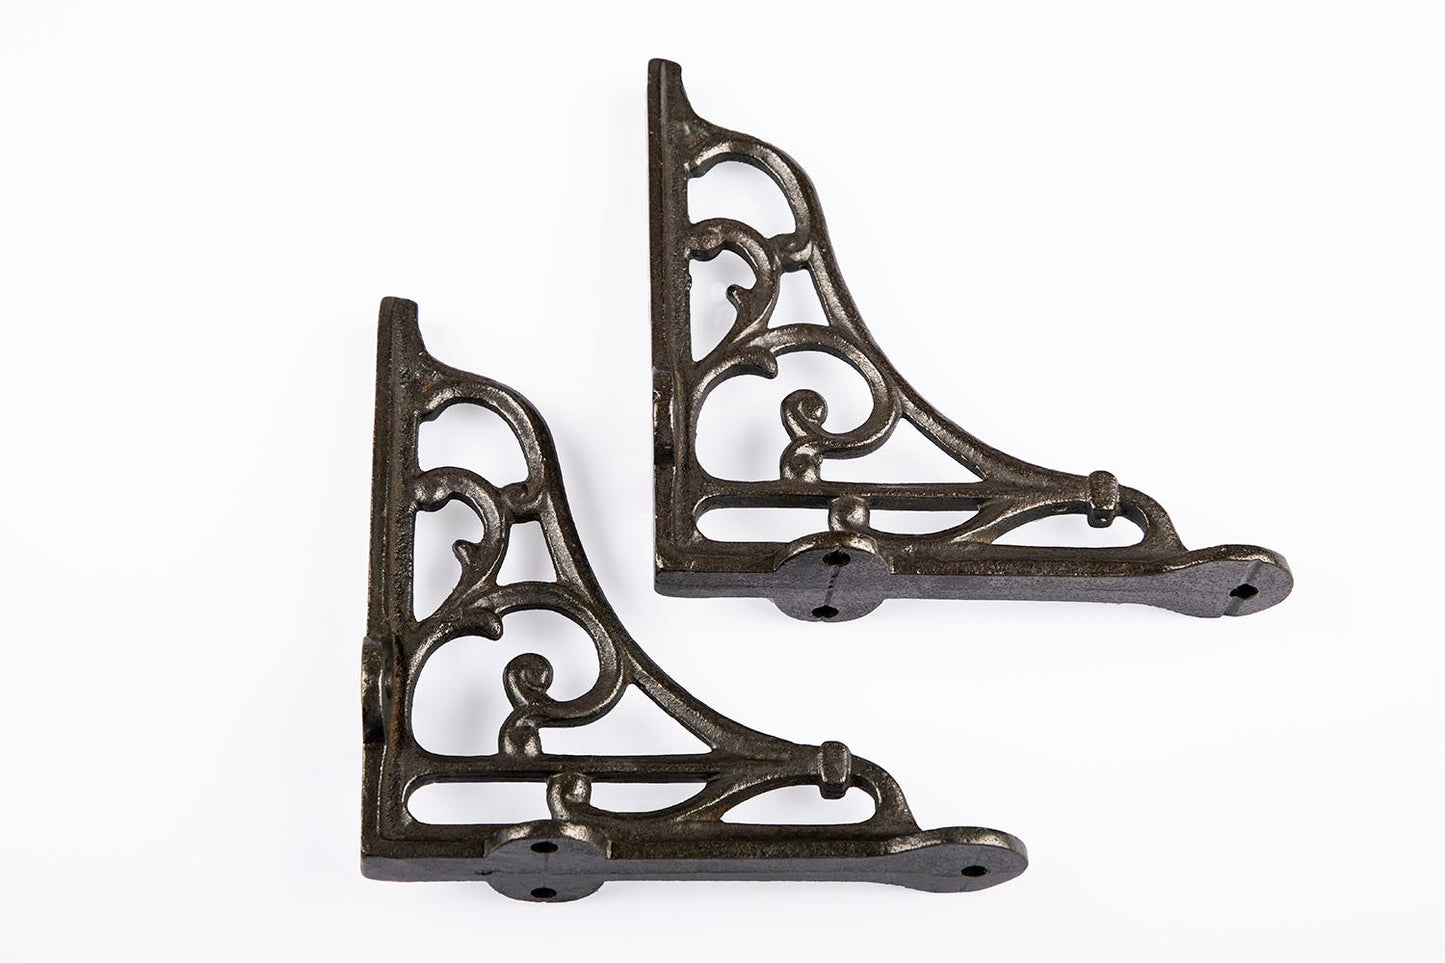 Pair of Victorian Scroll Shelf Brackets 9x6 Inch Bracket Cast Iron